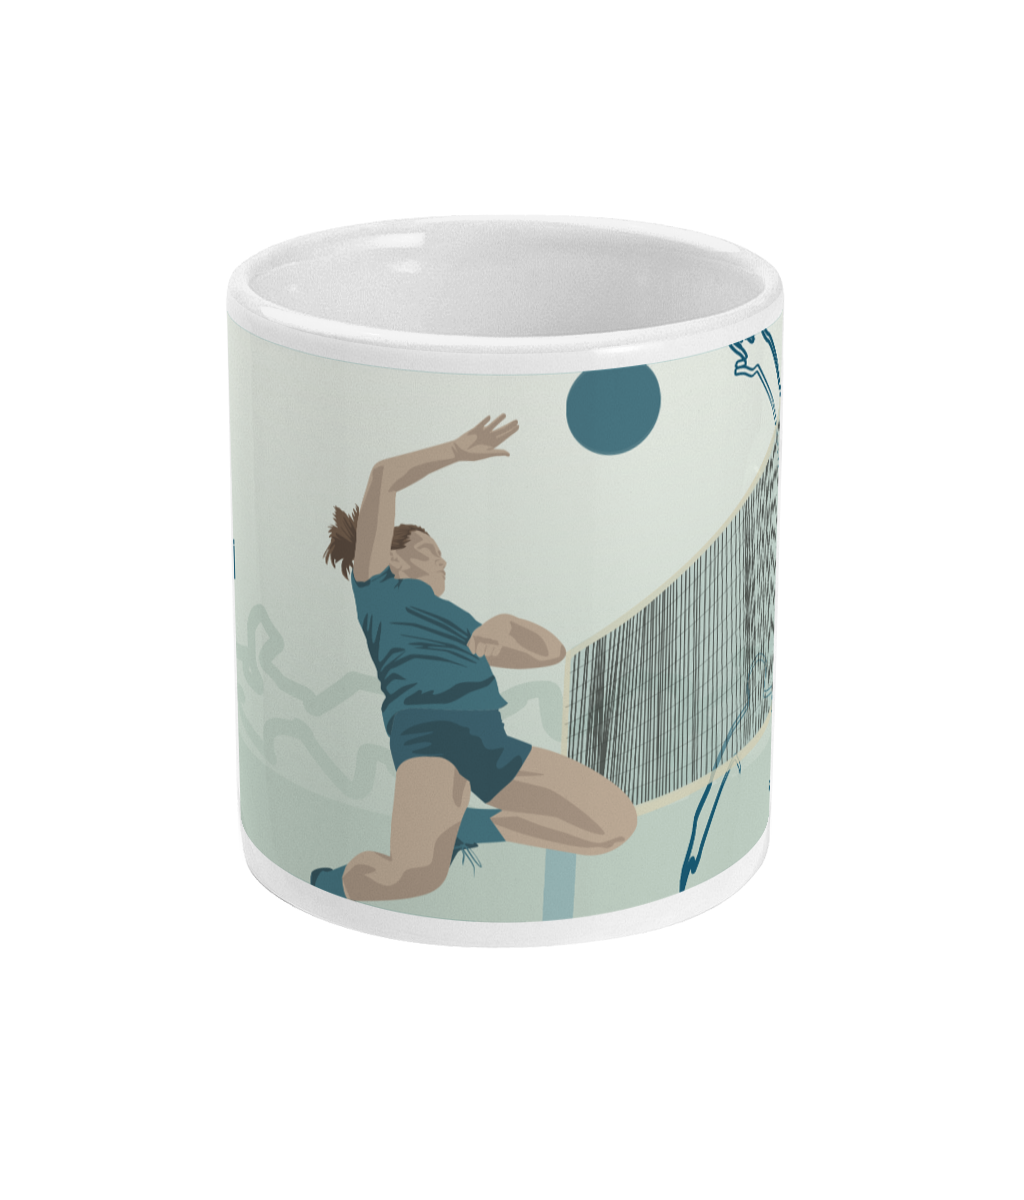 Tasse ou mug de volleyball "La volleyeuse" - Personnalisable